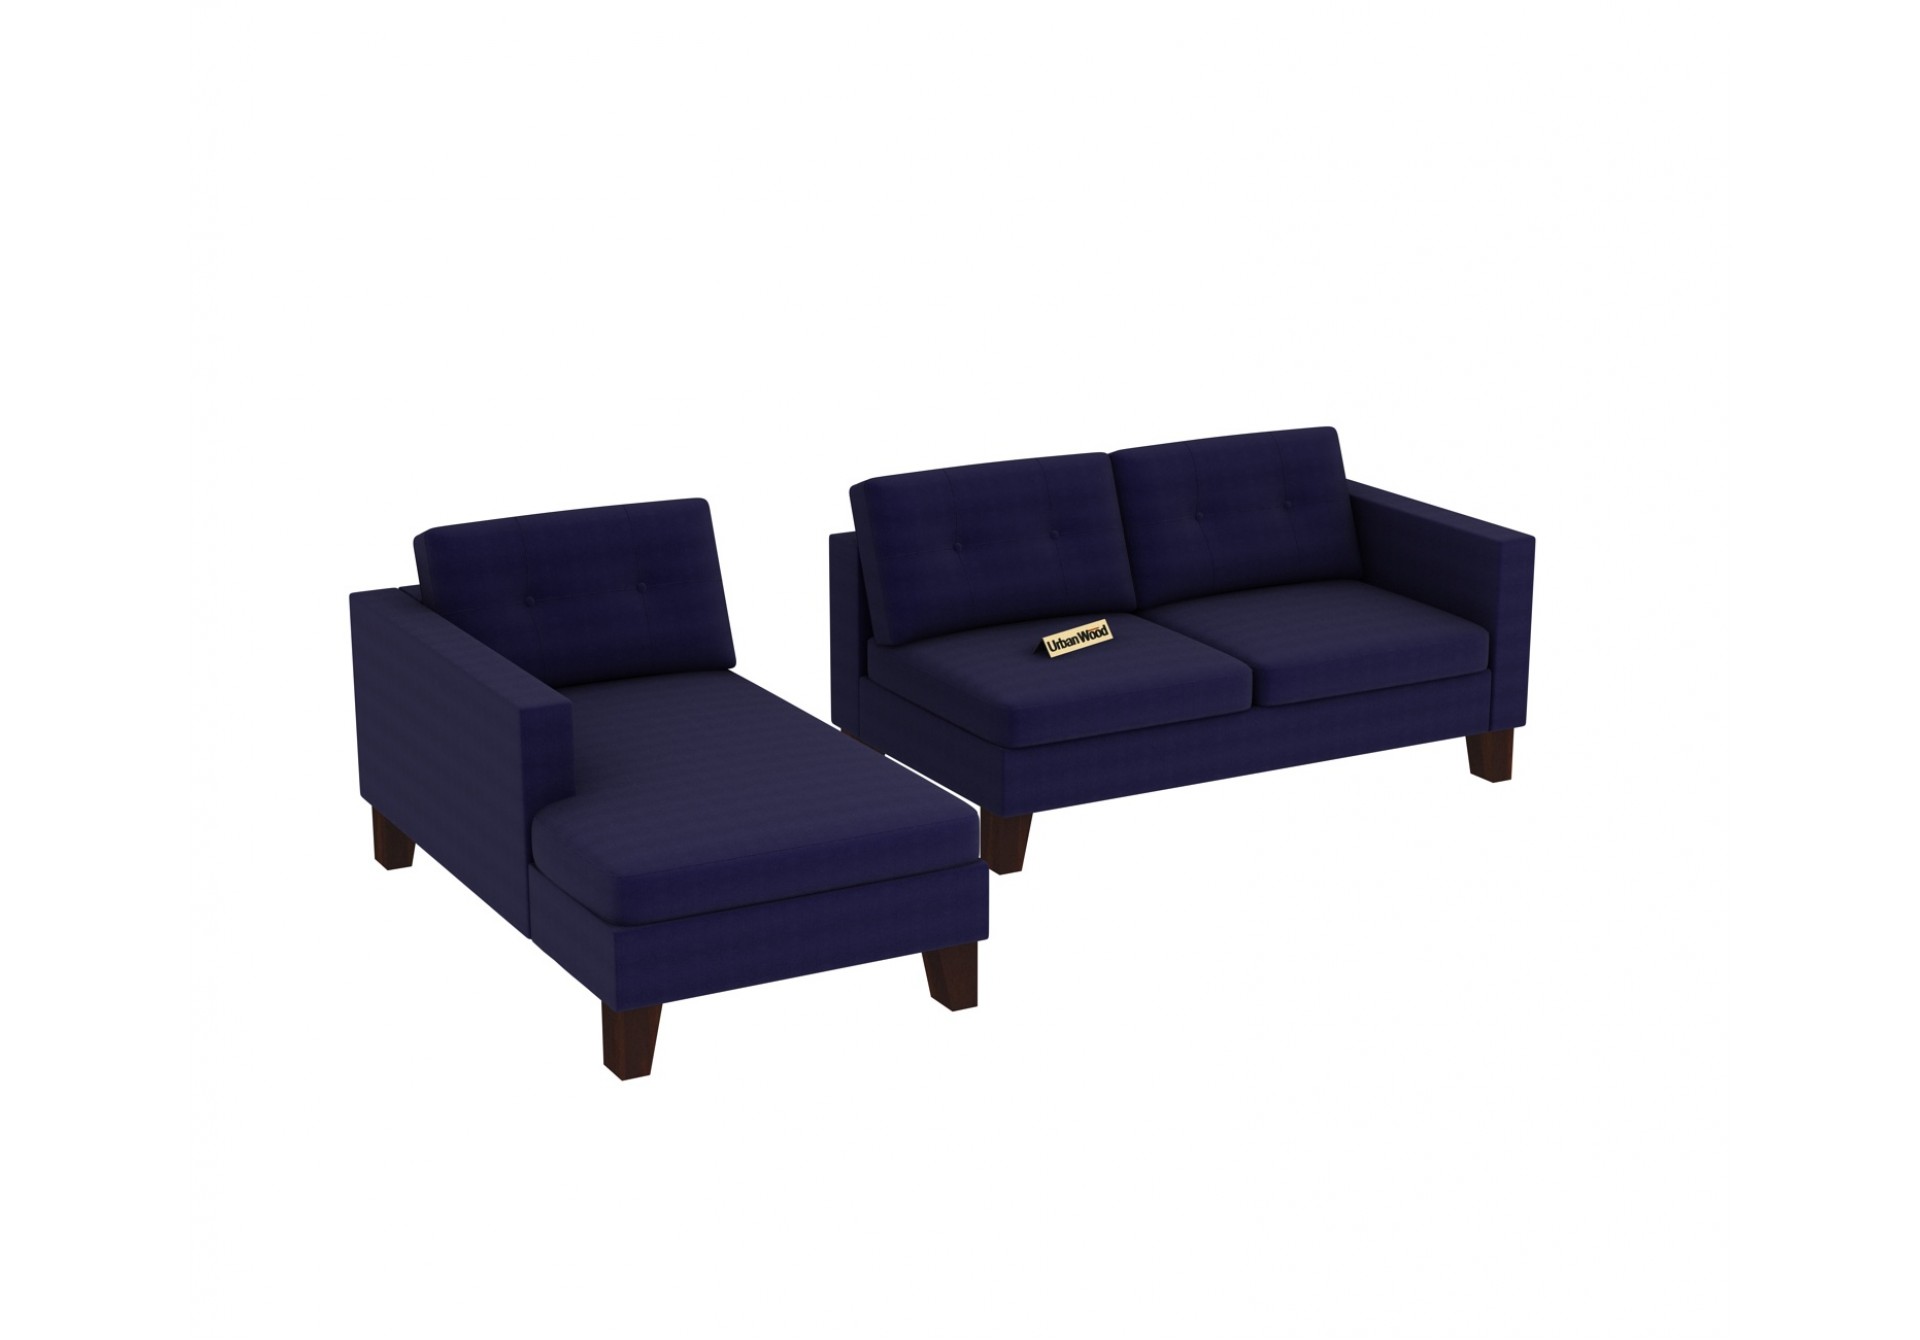 Paul L-Shaped Left Aligned Sofa ( Cotton, Navy blue )